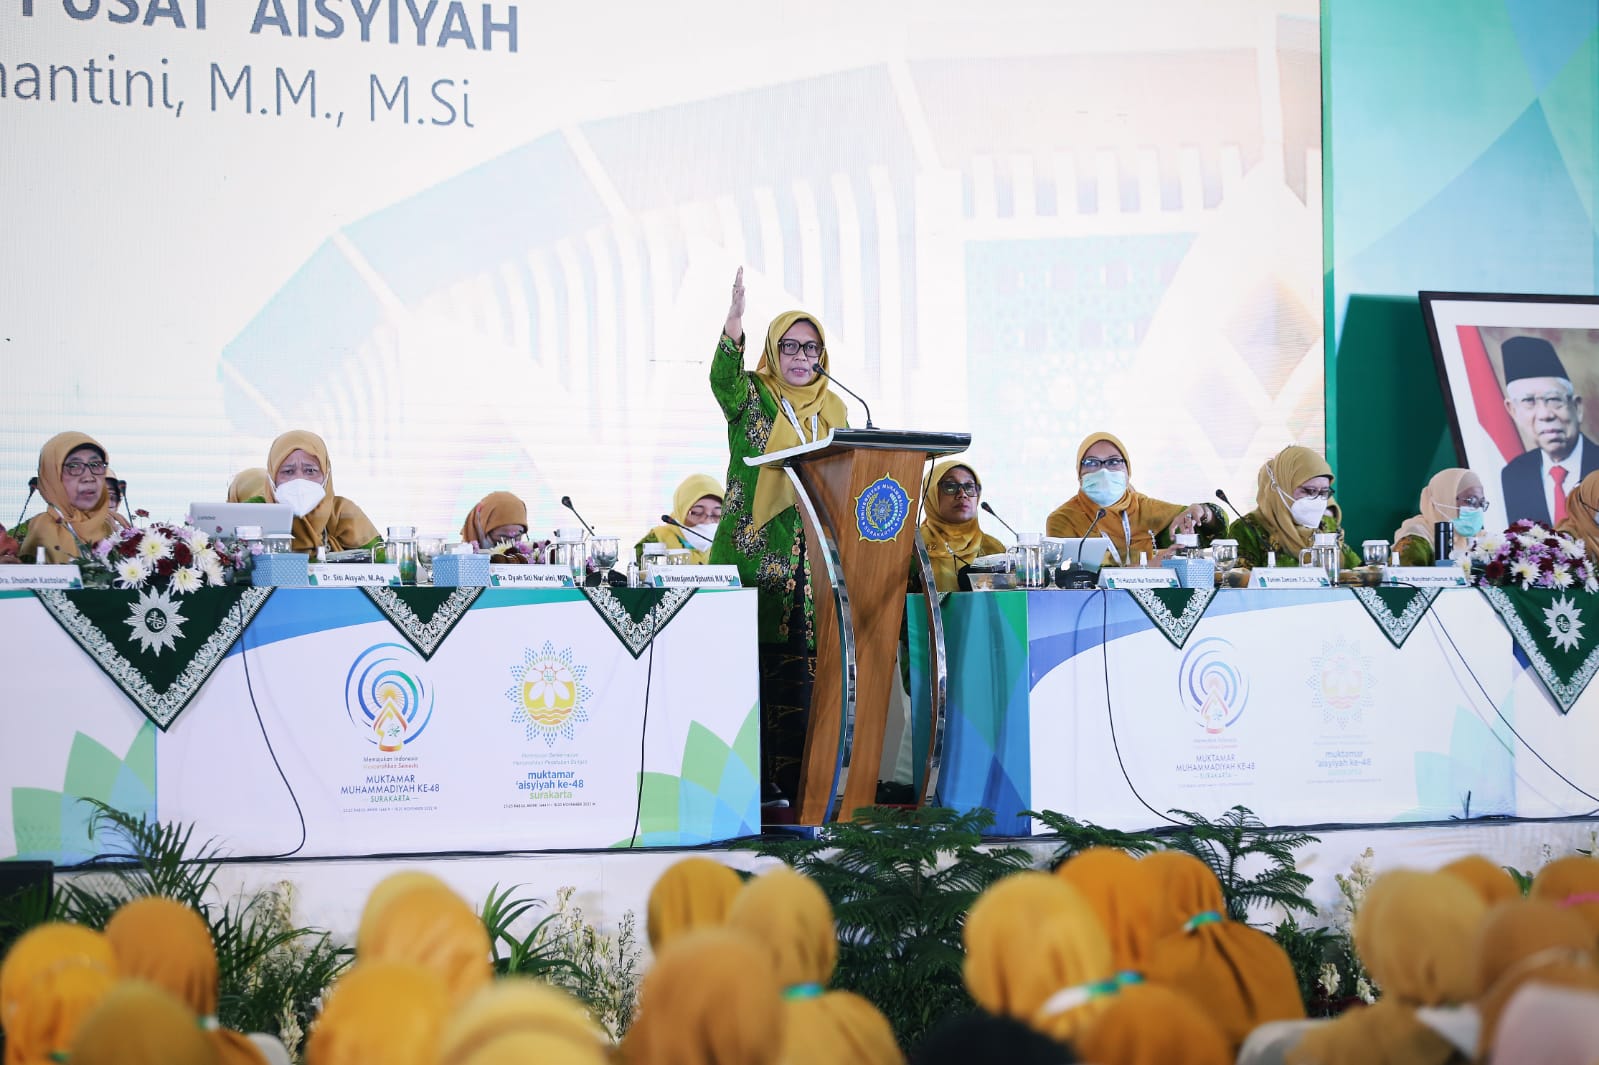 Muktamar ‘Aisyiyah, Berikut 7 Nama Terpilih Formatur Anggota Pimpinan Pusat